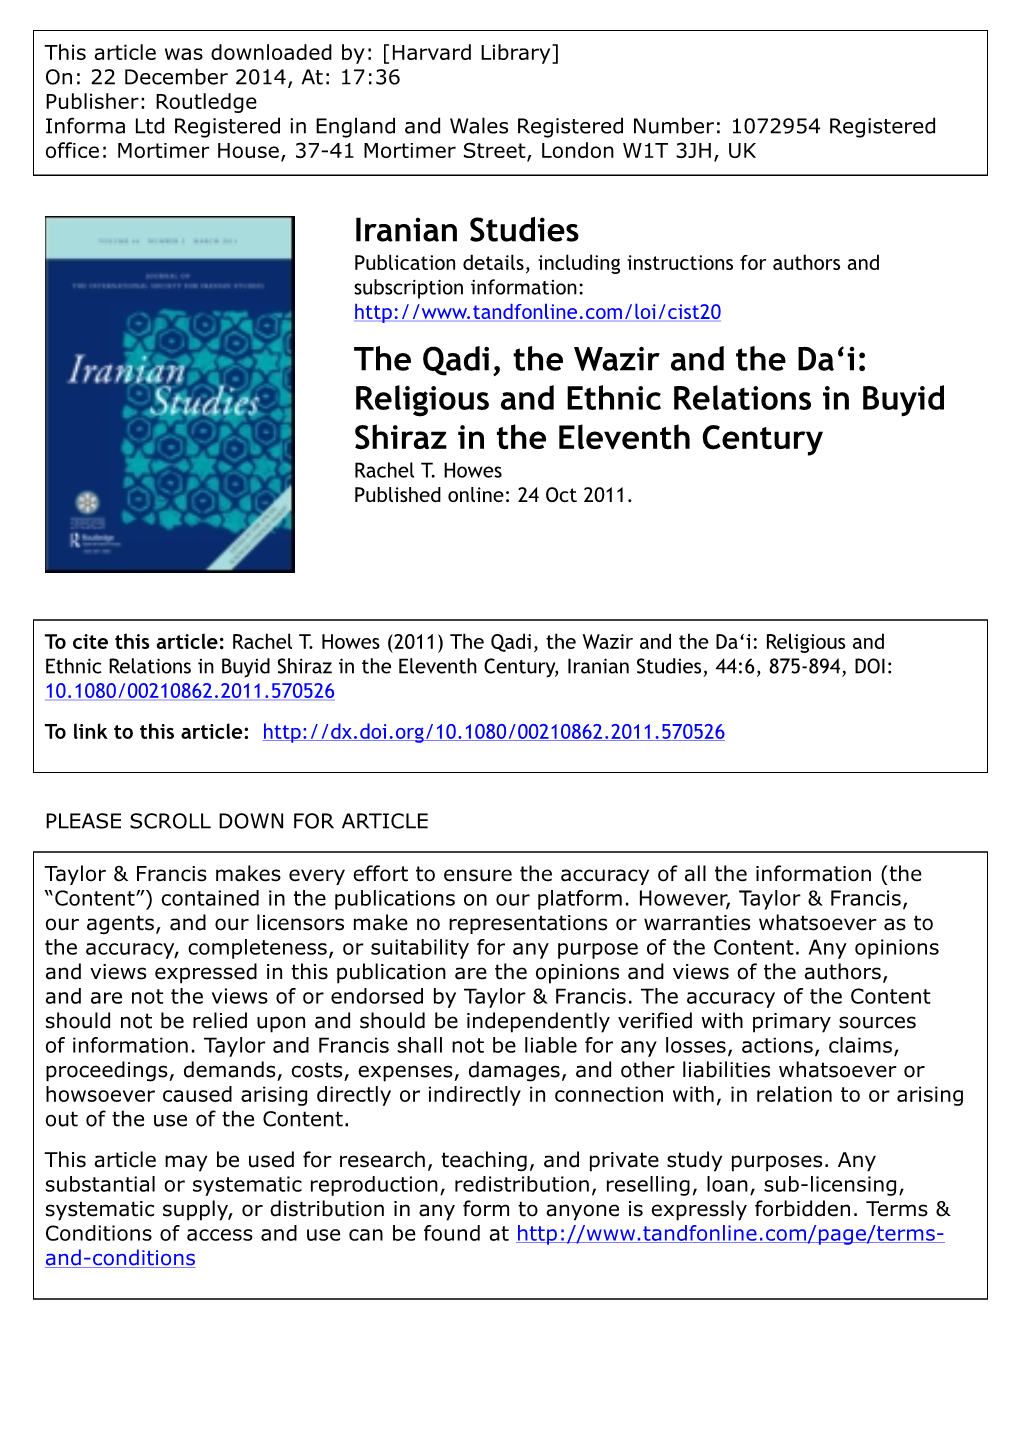 Iranian Studies the Qadi, the Wazir and the Da'i: Religious And